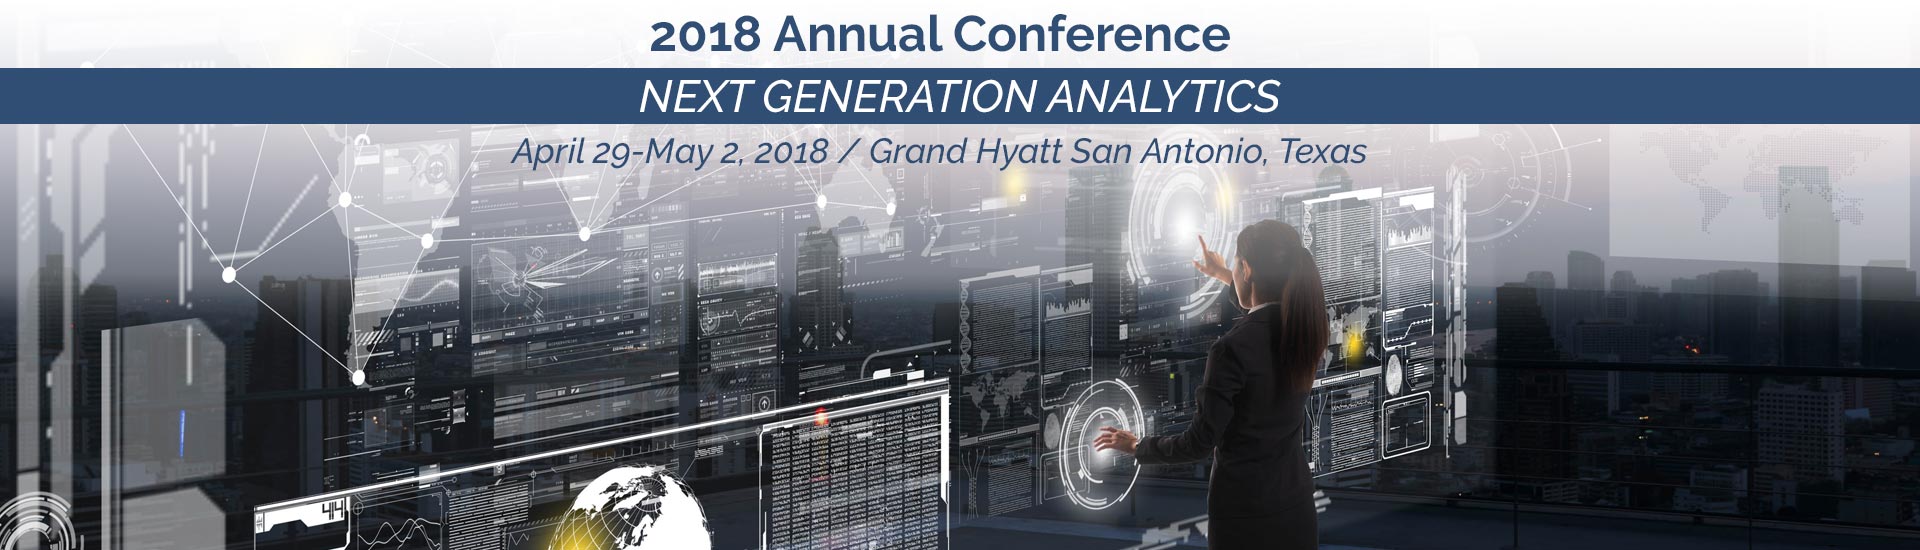 2018 Annual Conference • San Antonio, Texas • April 29-May 2